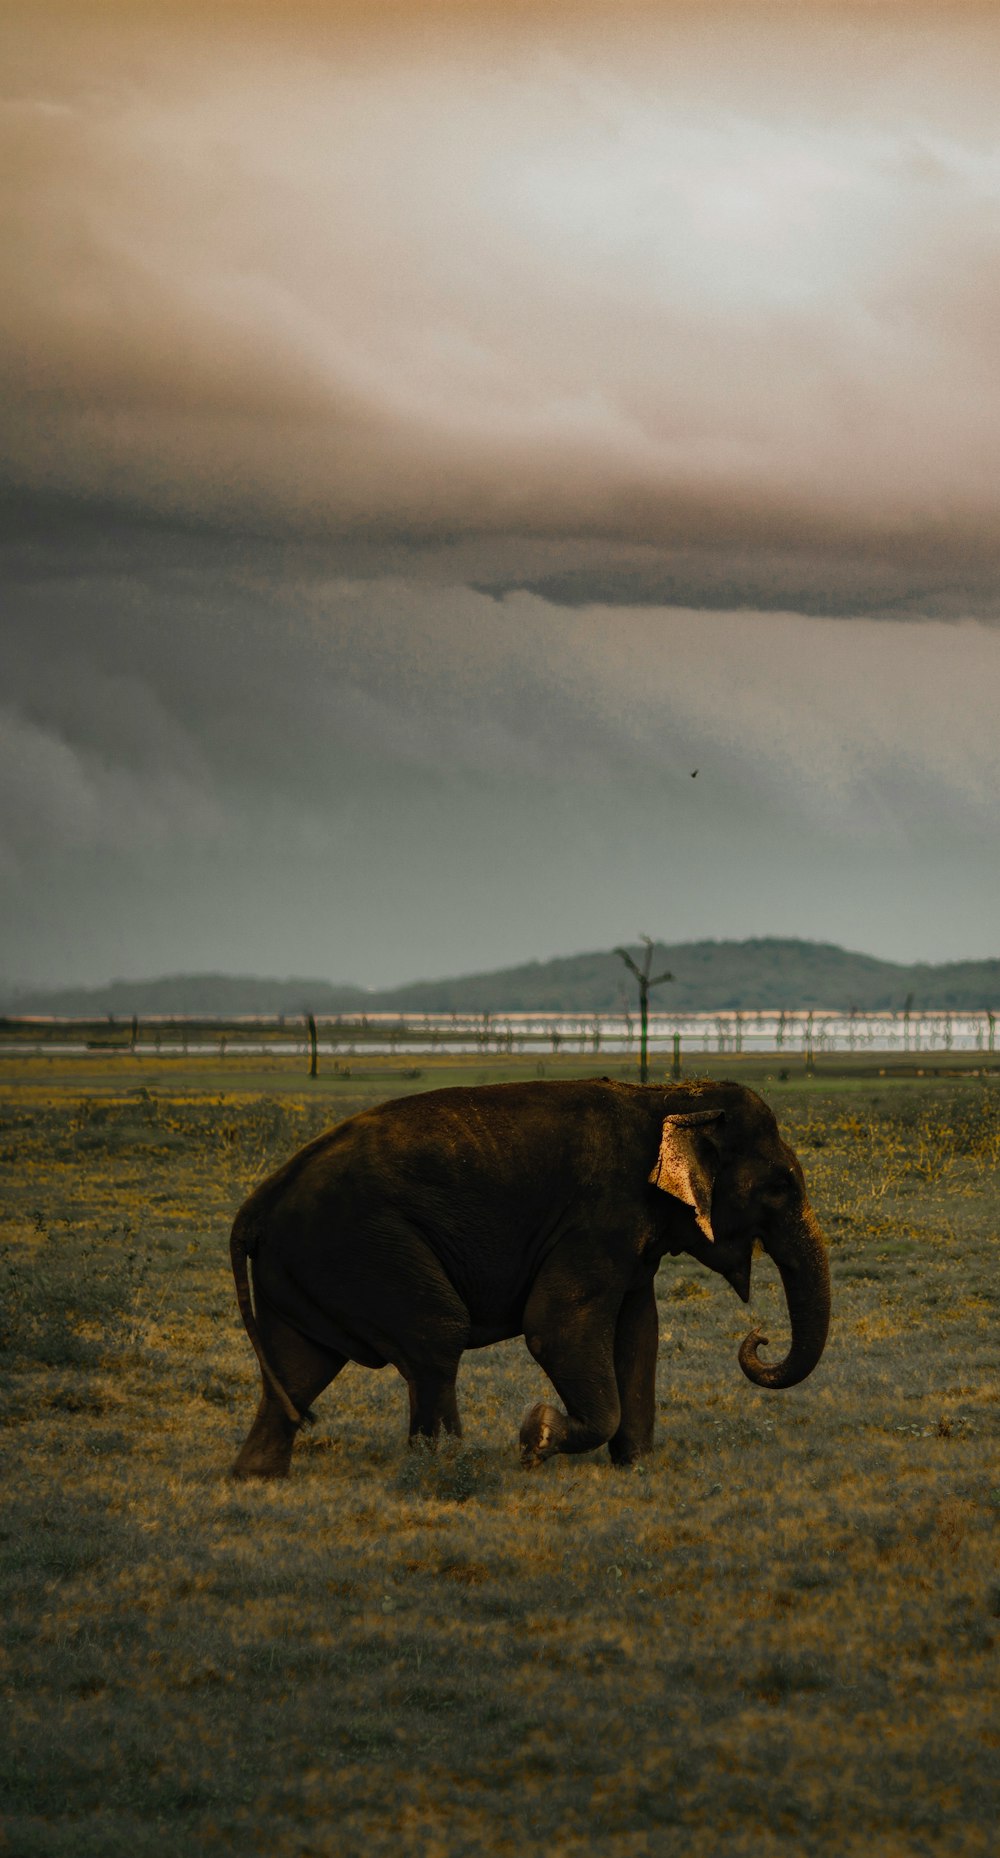 grayscale photo of elephant on field